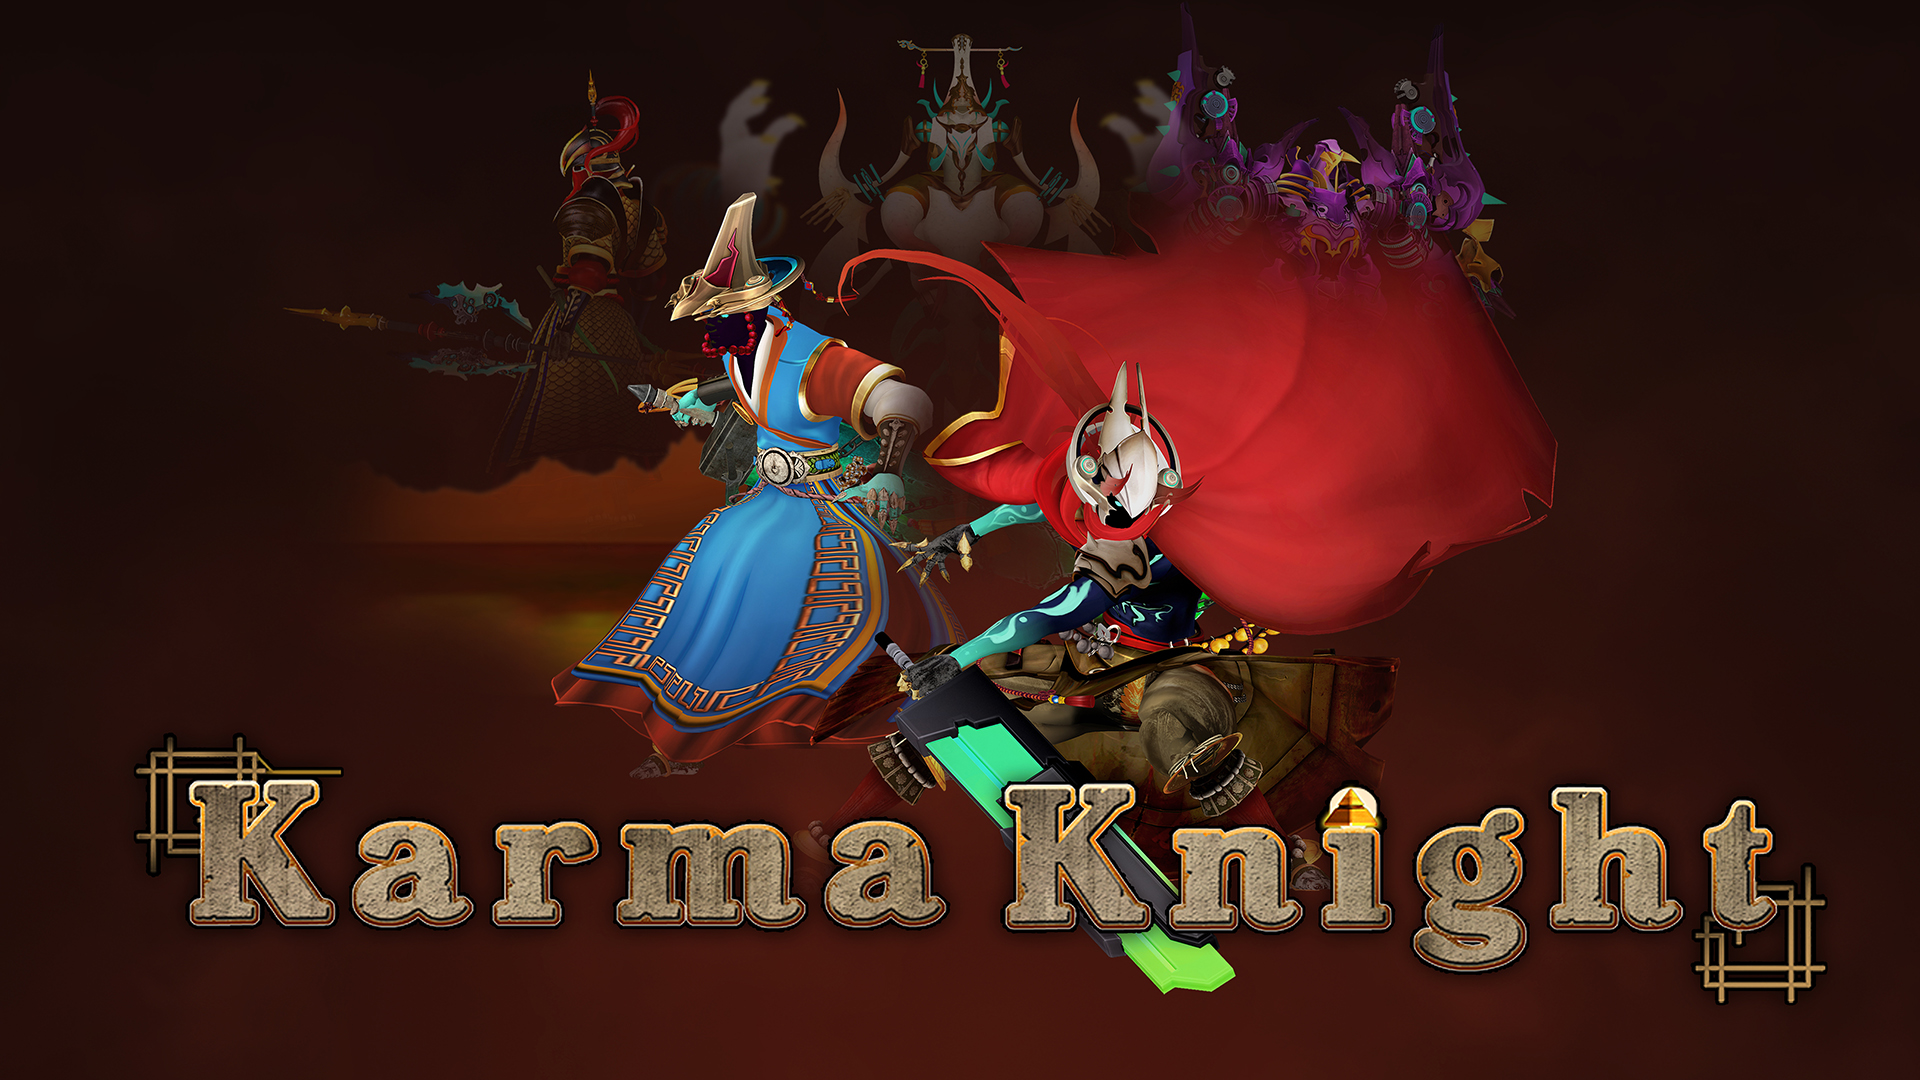 Karma Knight